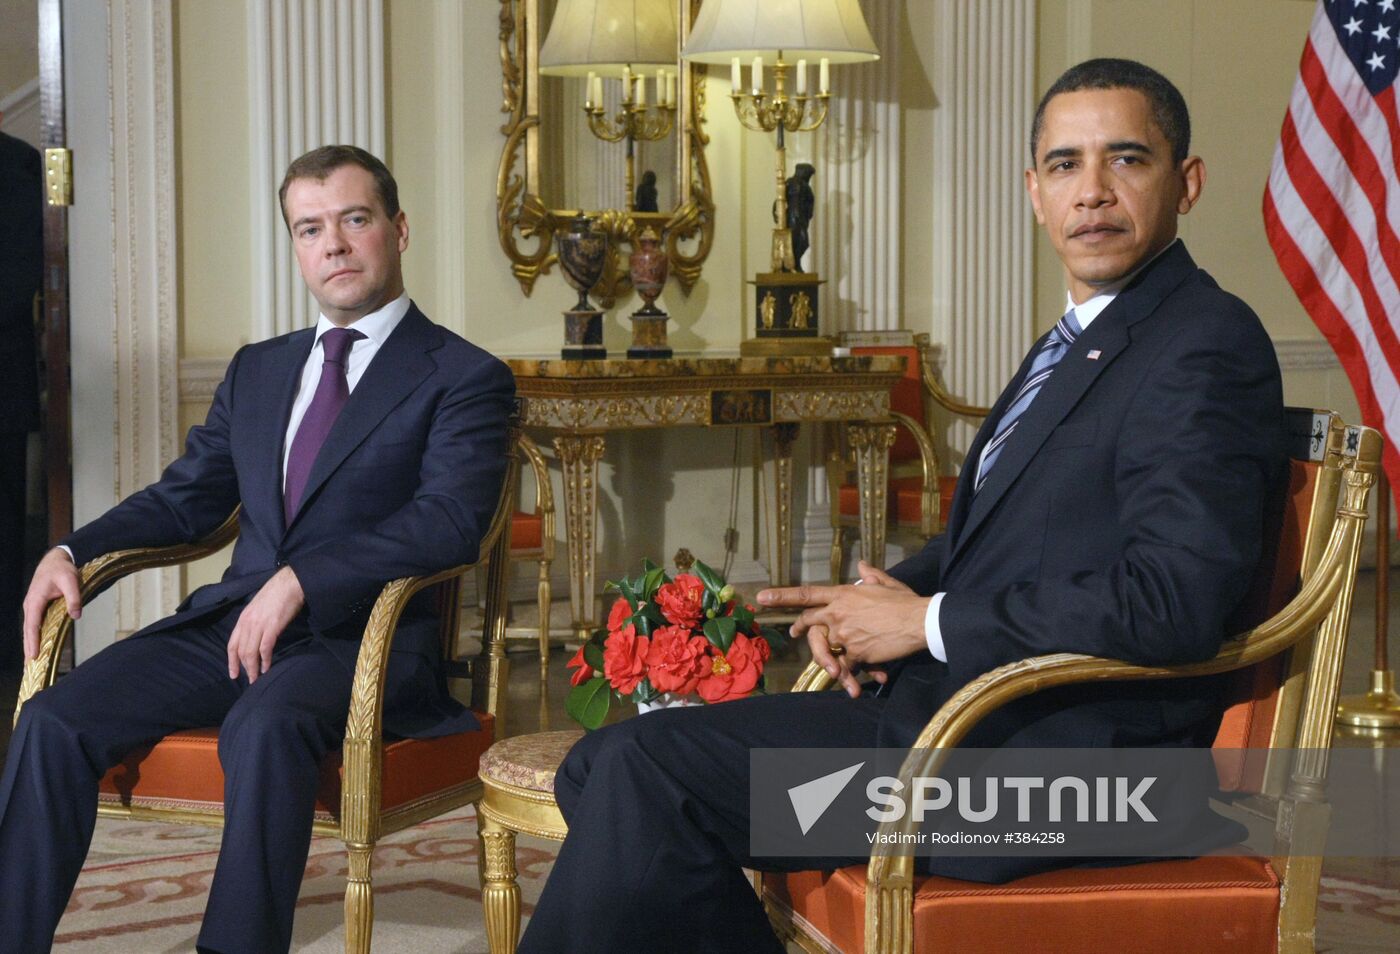 Dmitry Medvedev meeting with Barack Obama